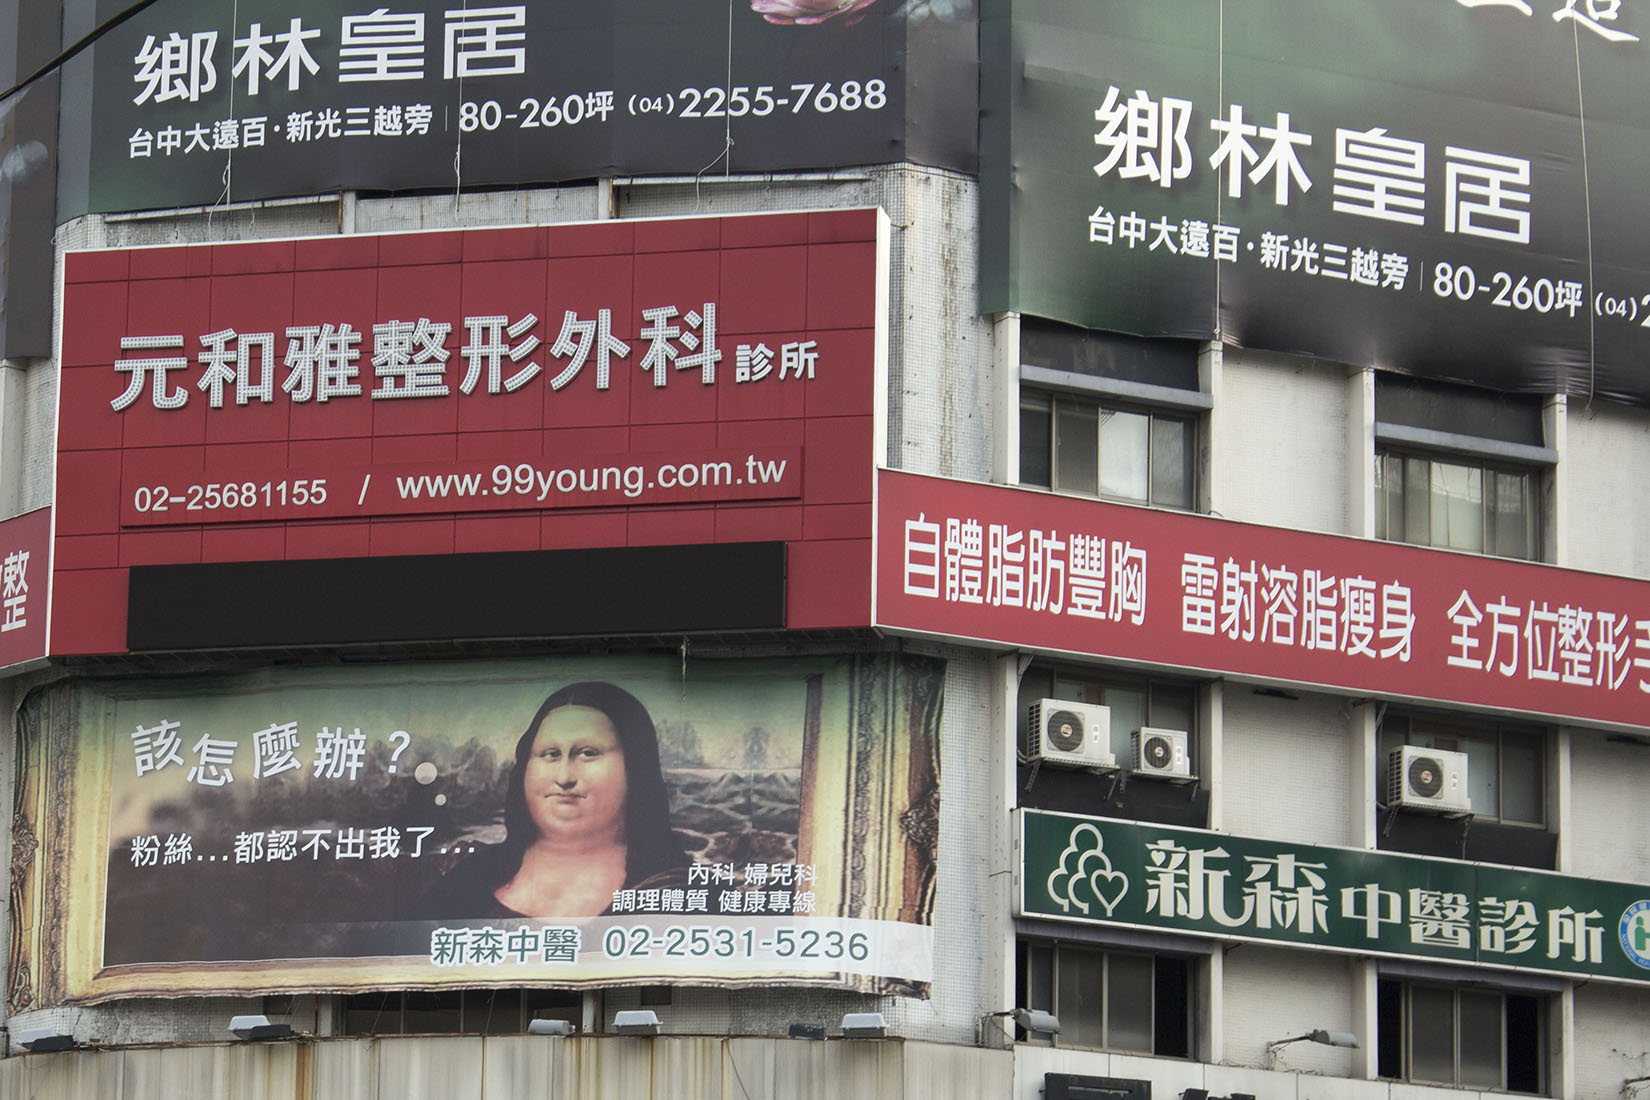 Taipei, voyage, immeuble, publicités, sinogrammes, Joconde obèse, Mona Lisa